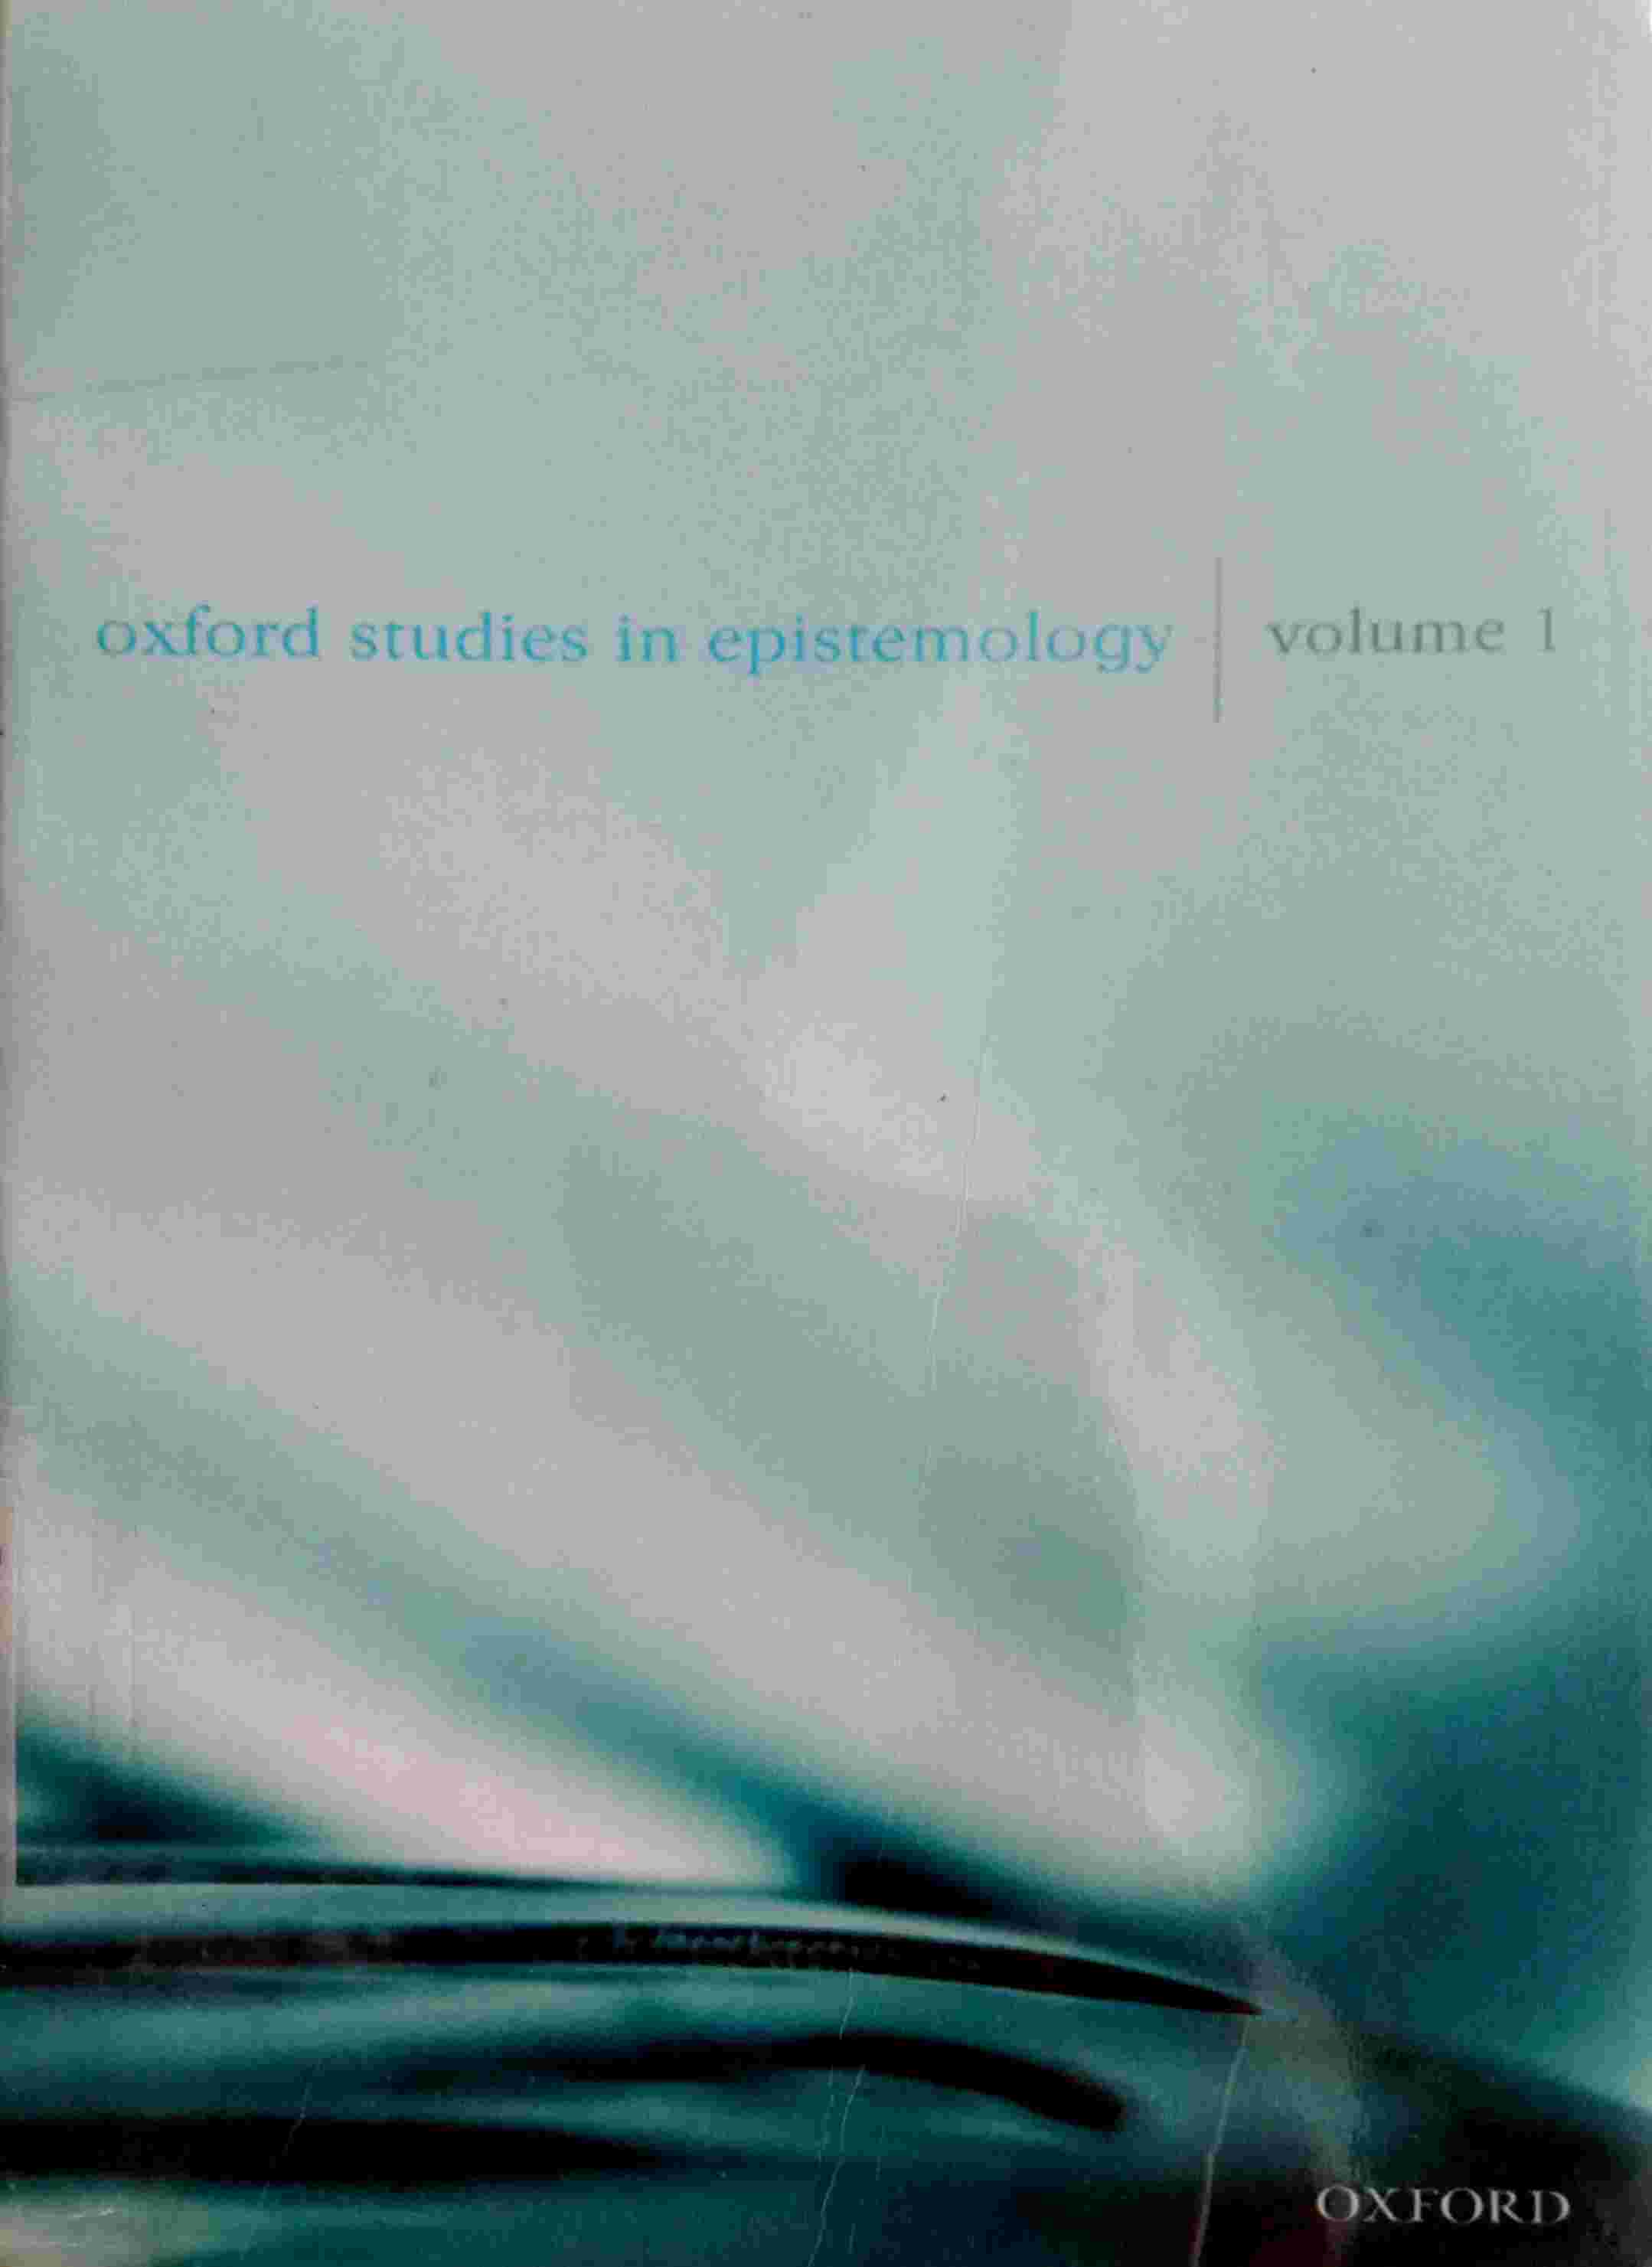 OXFORD STUDIES IN EPISTEMOLOGY